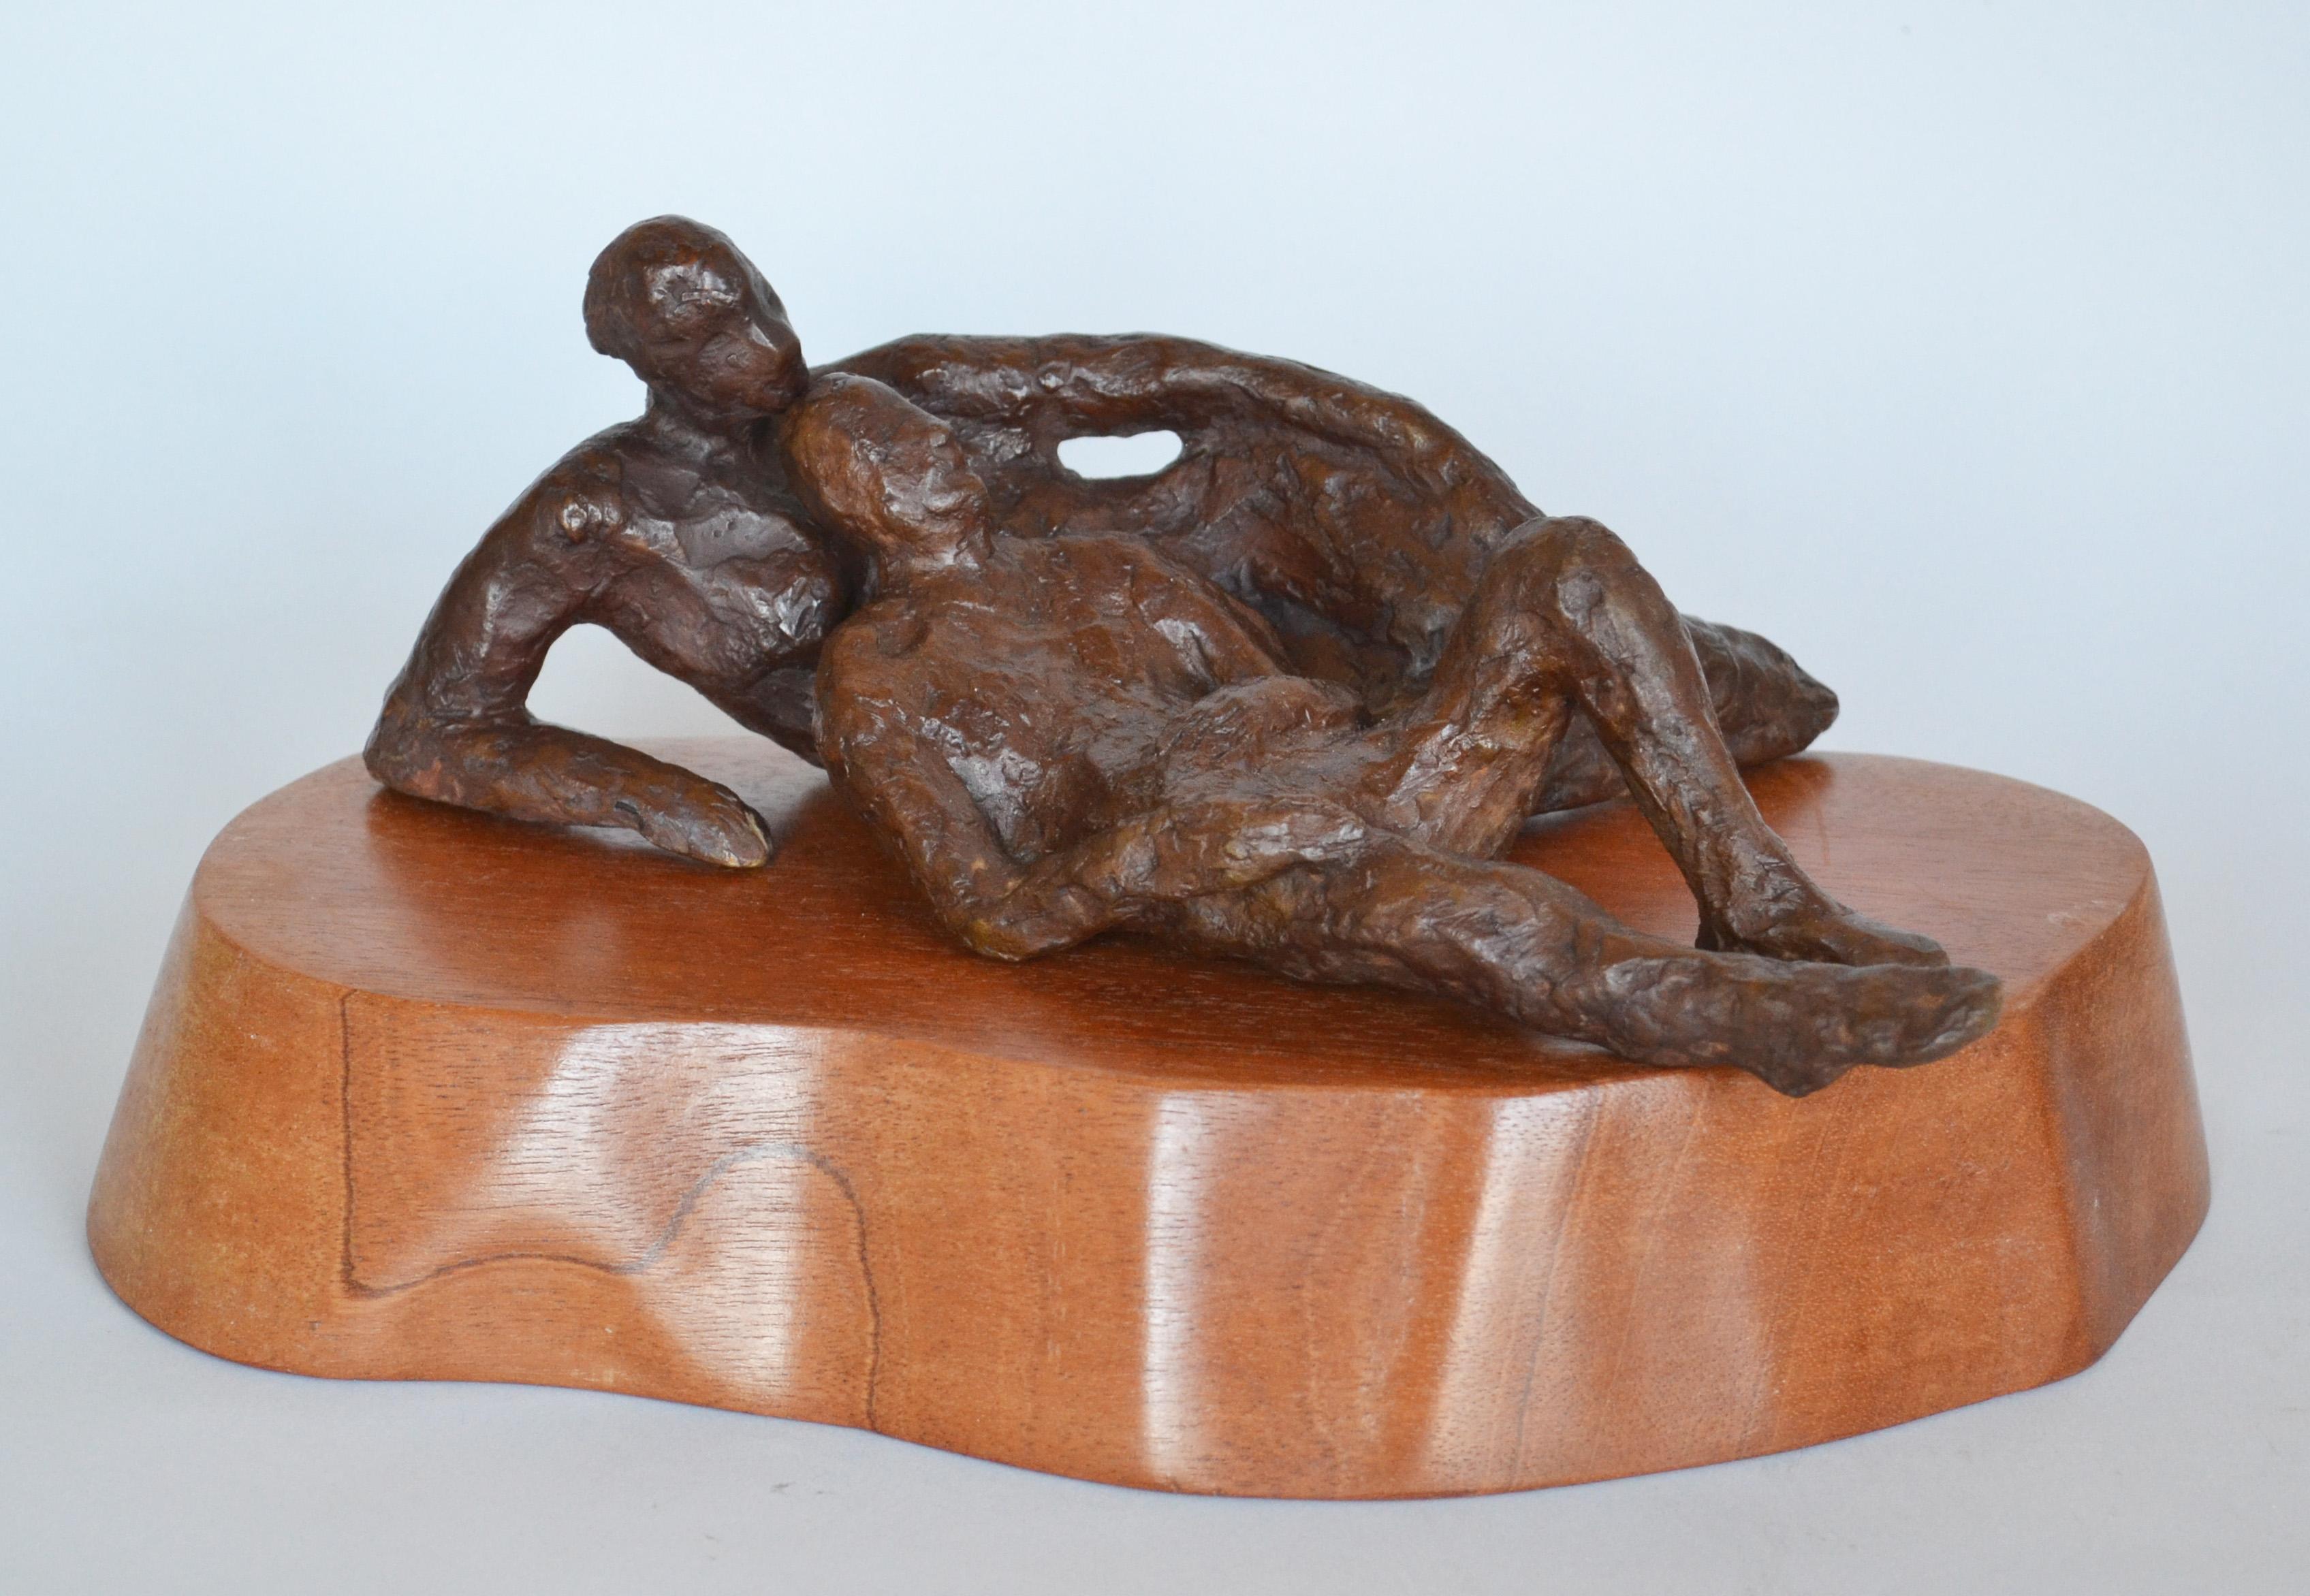 Repose - figurative bronze sculpture on wood base by Noa Bornstein 